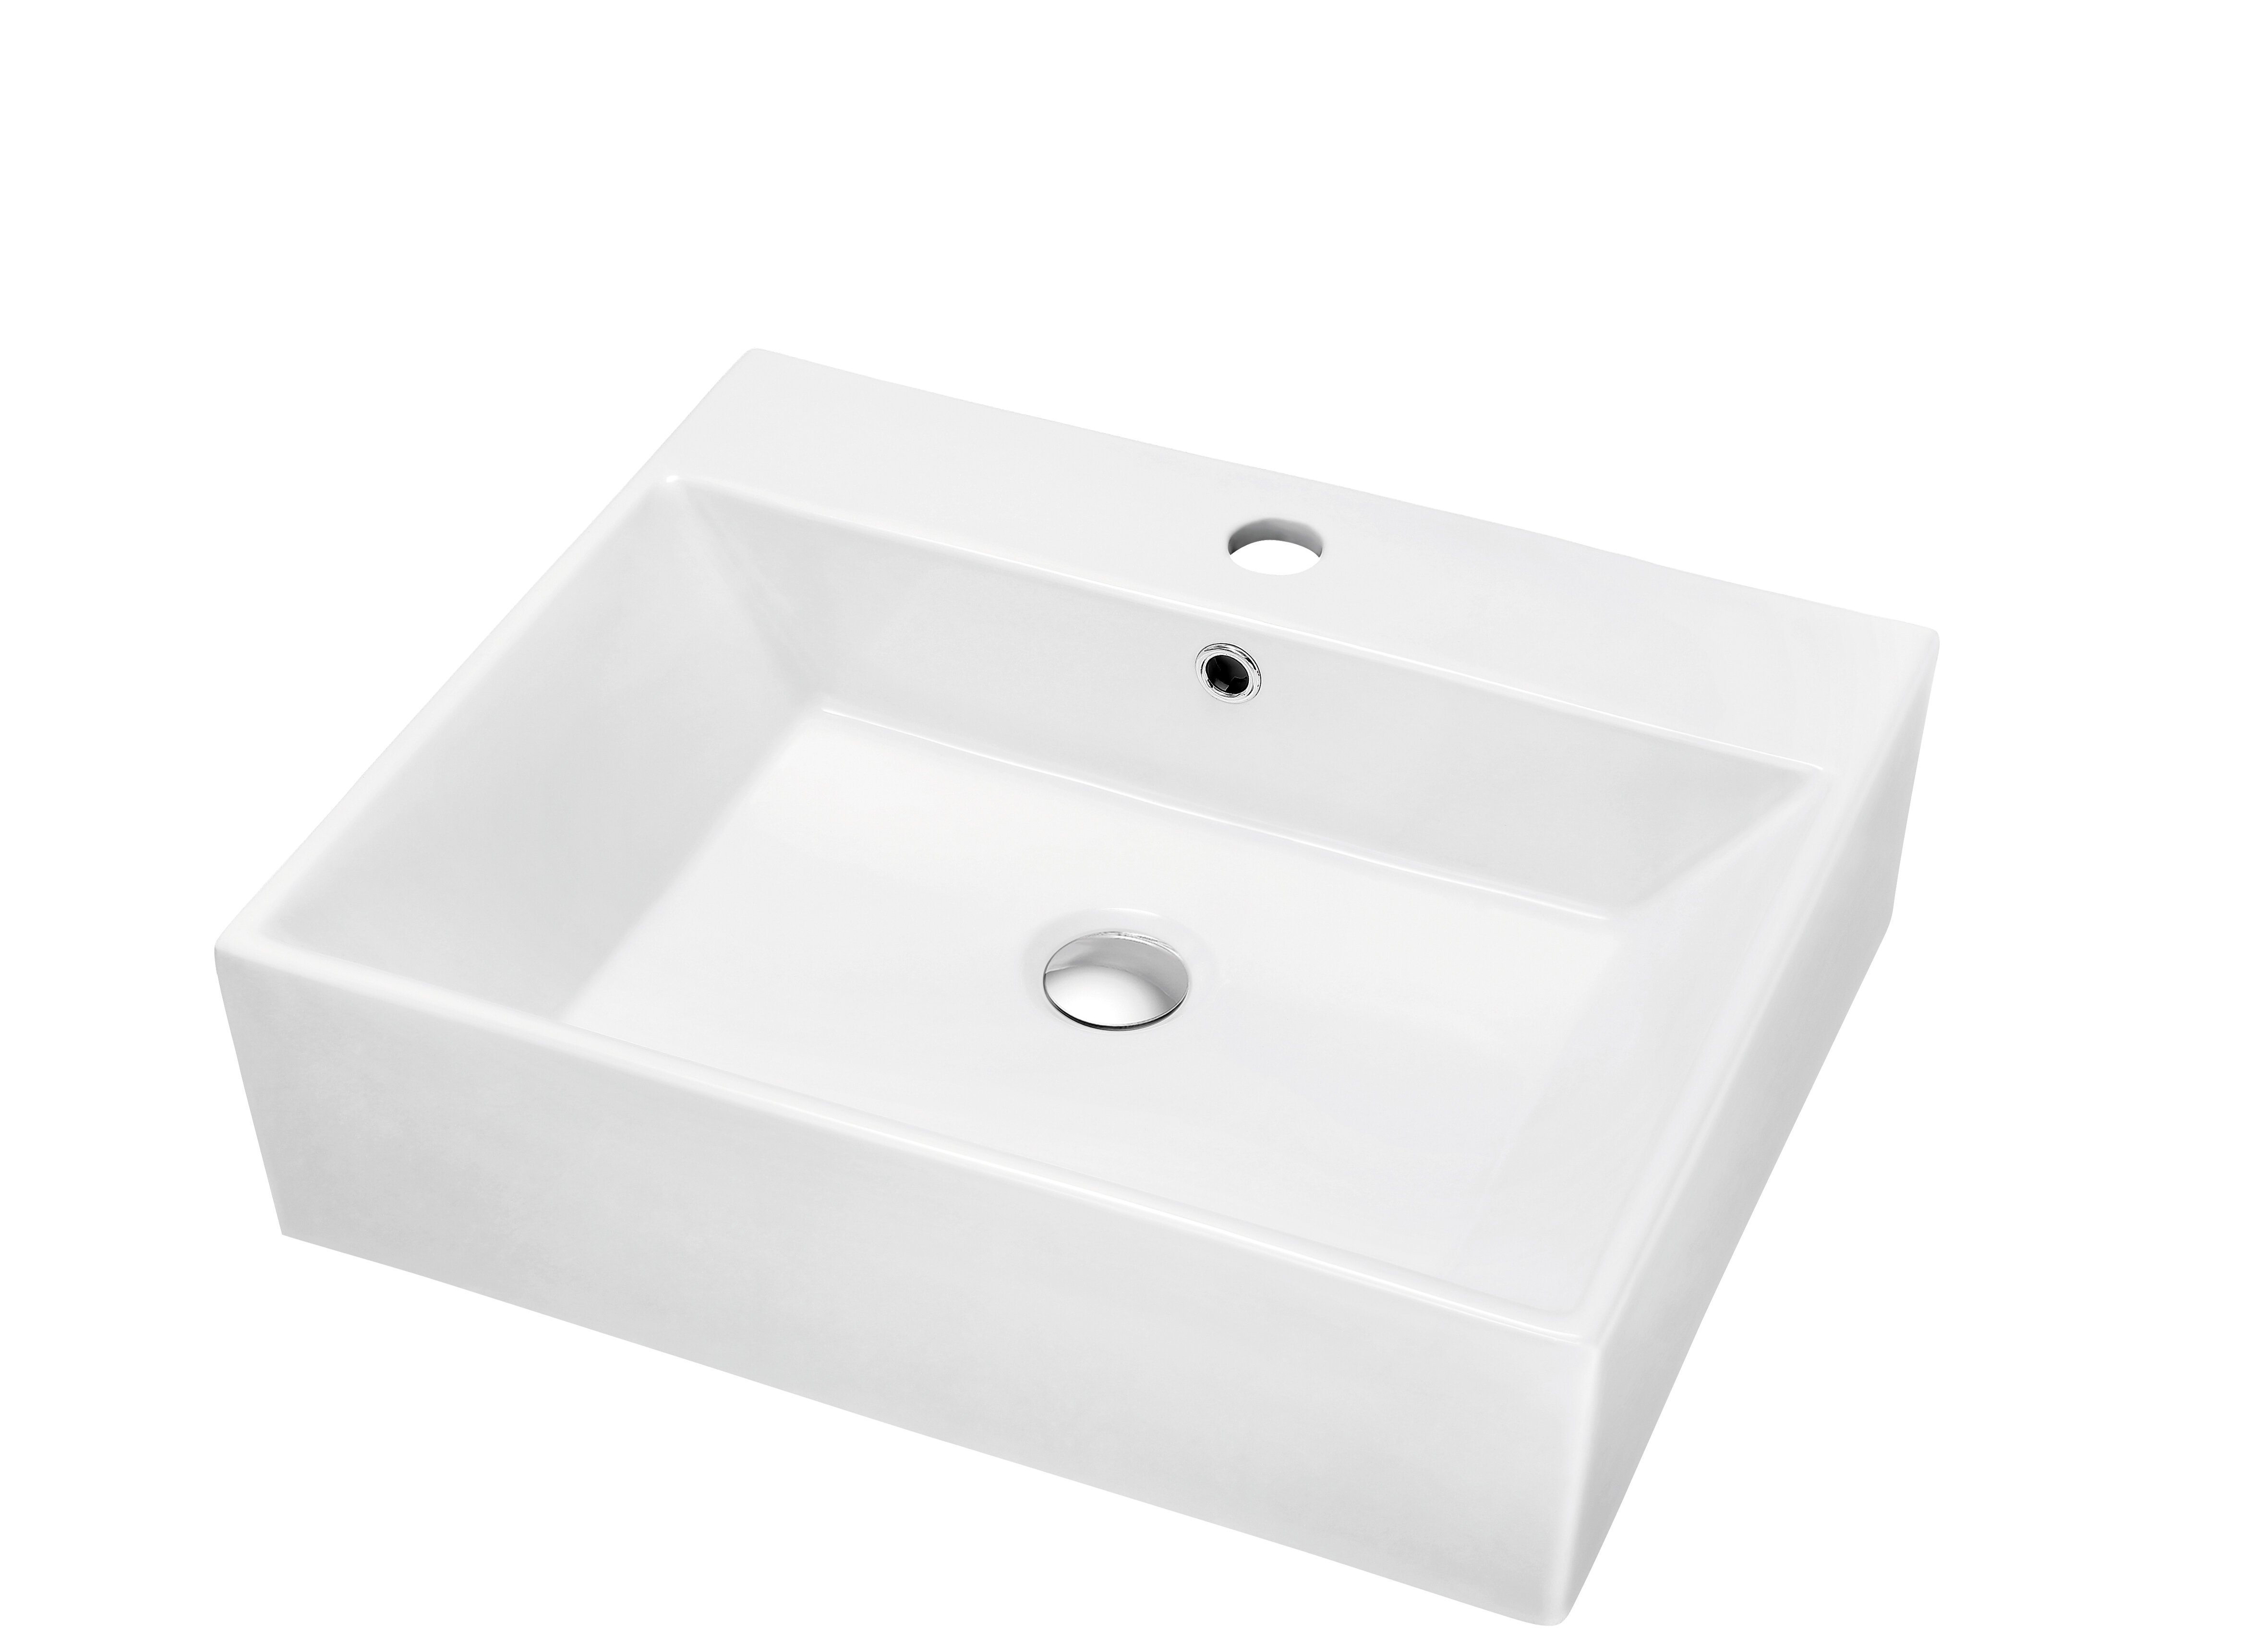 Dawn Usa Ceramic Rectangular Vessel Bathroom Sink With Overflow Reviews Wayfair